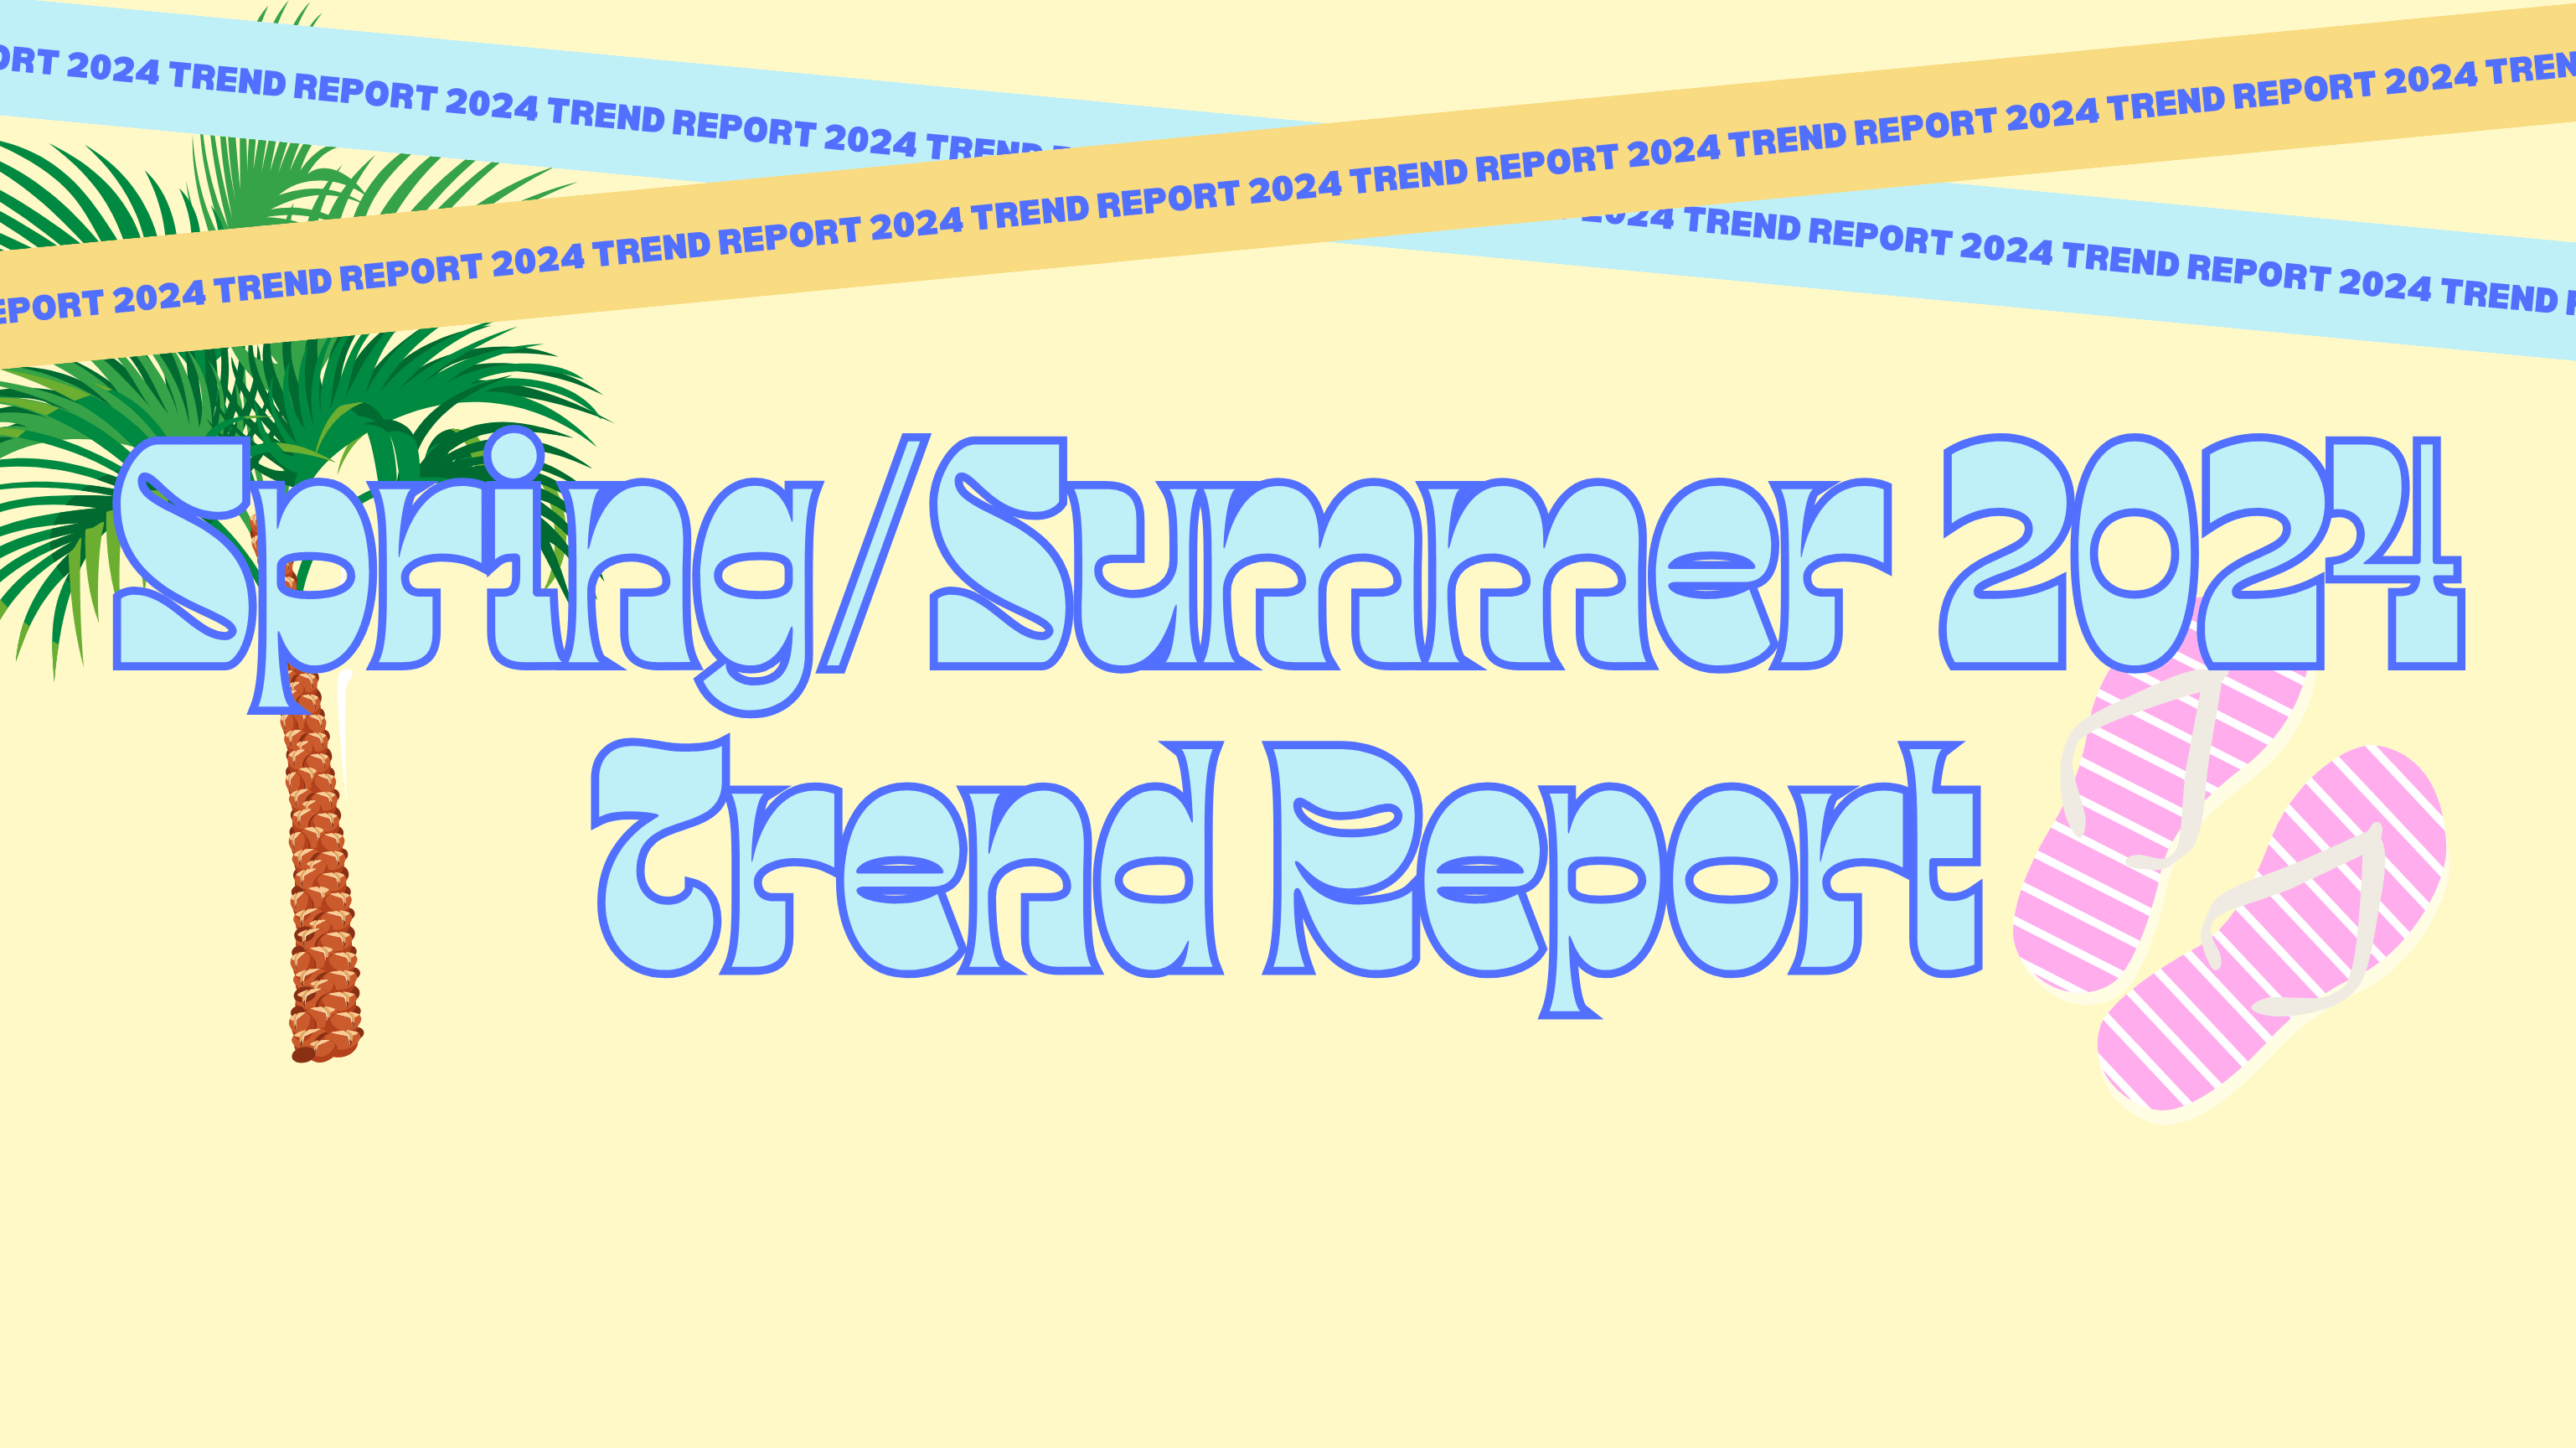 Spring/Summer Trend Report 2024